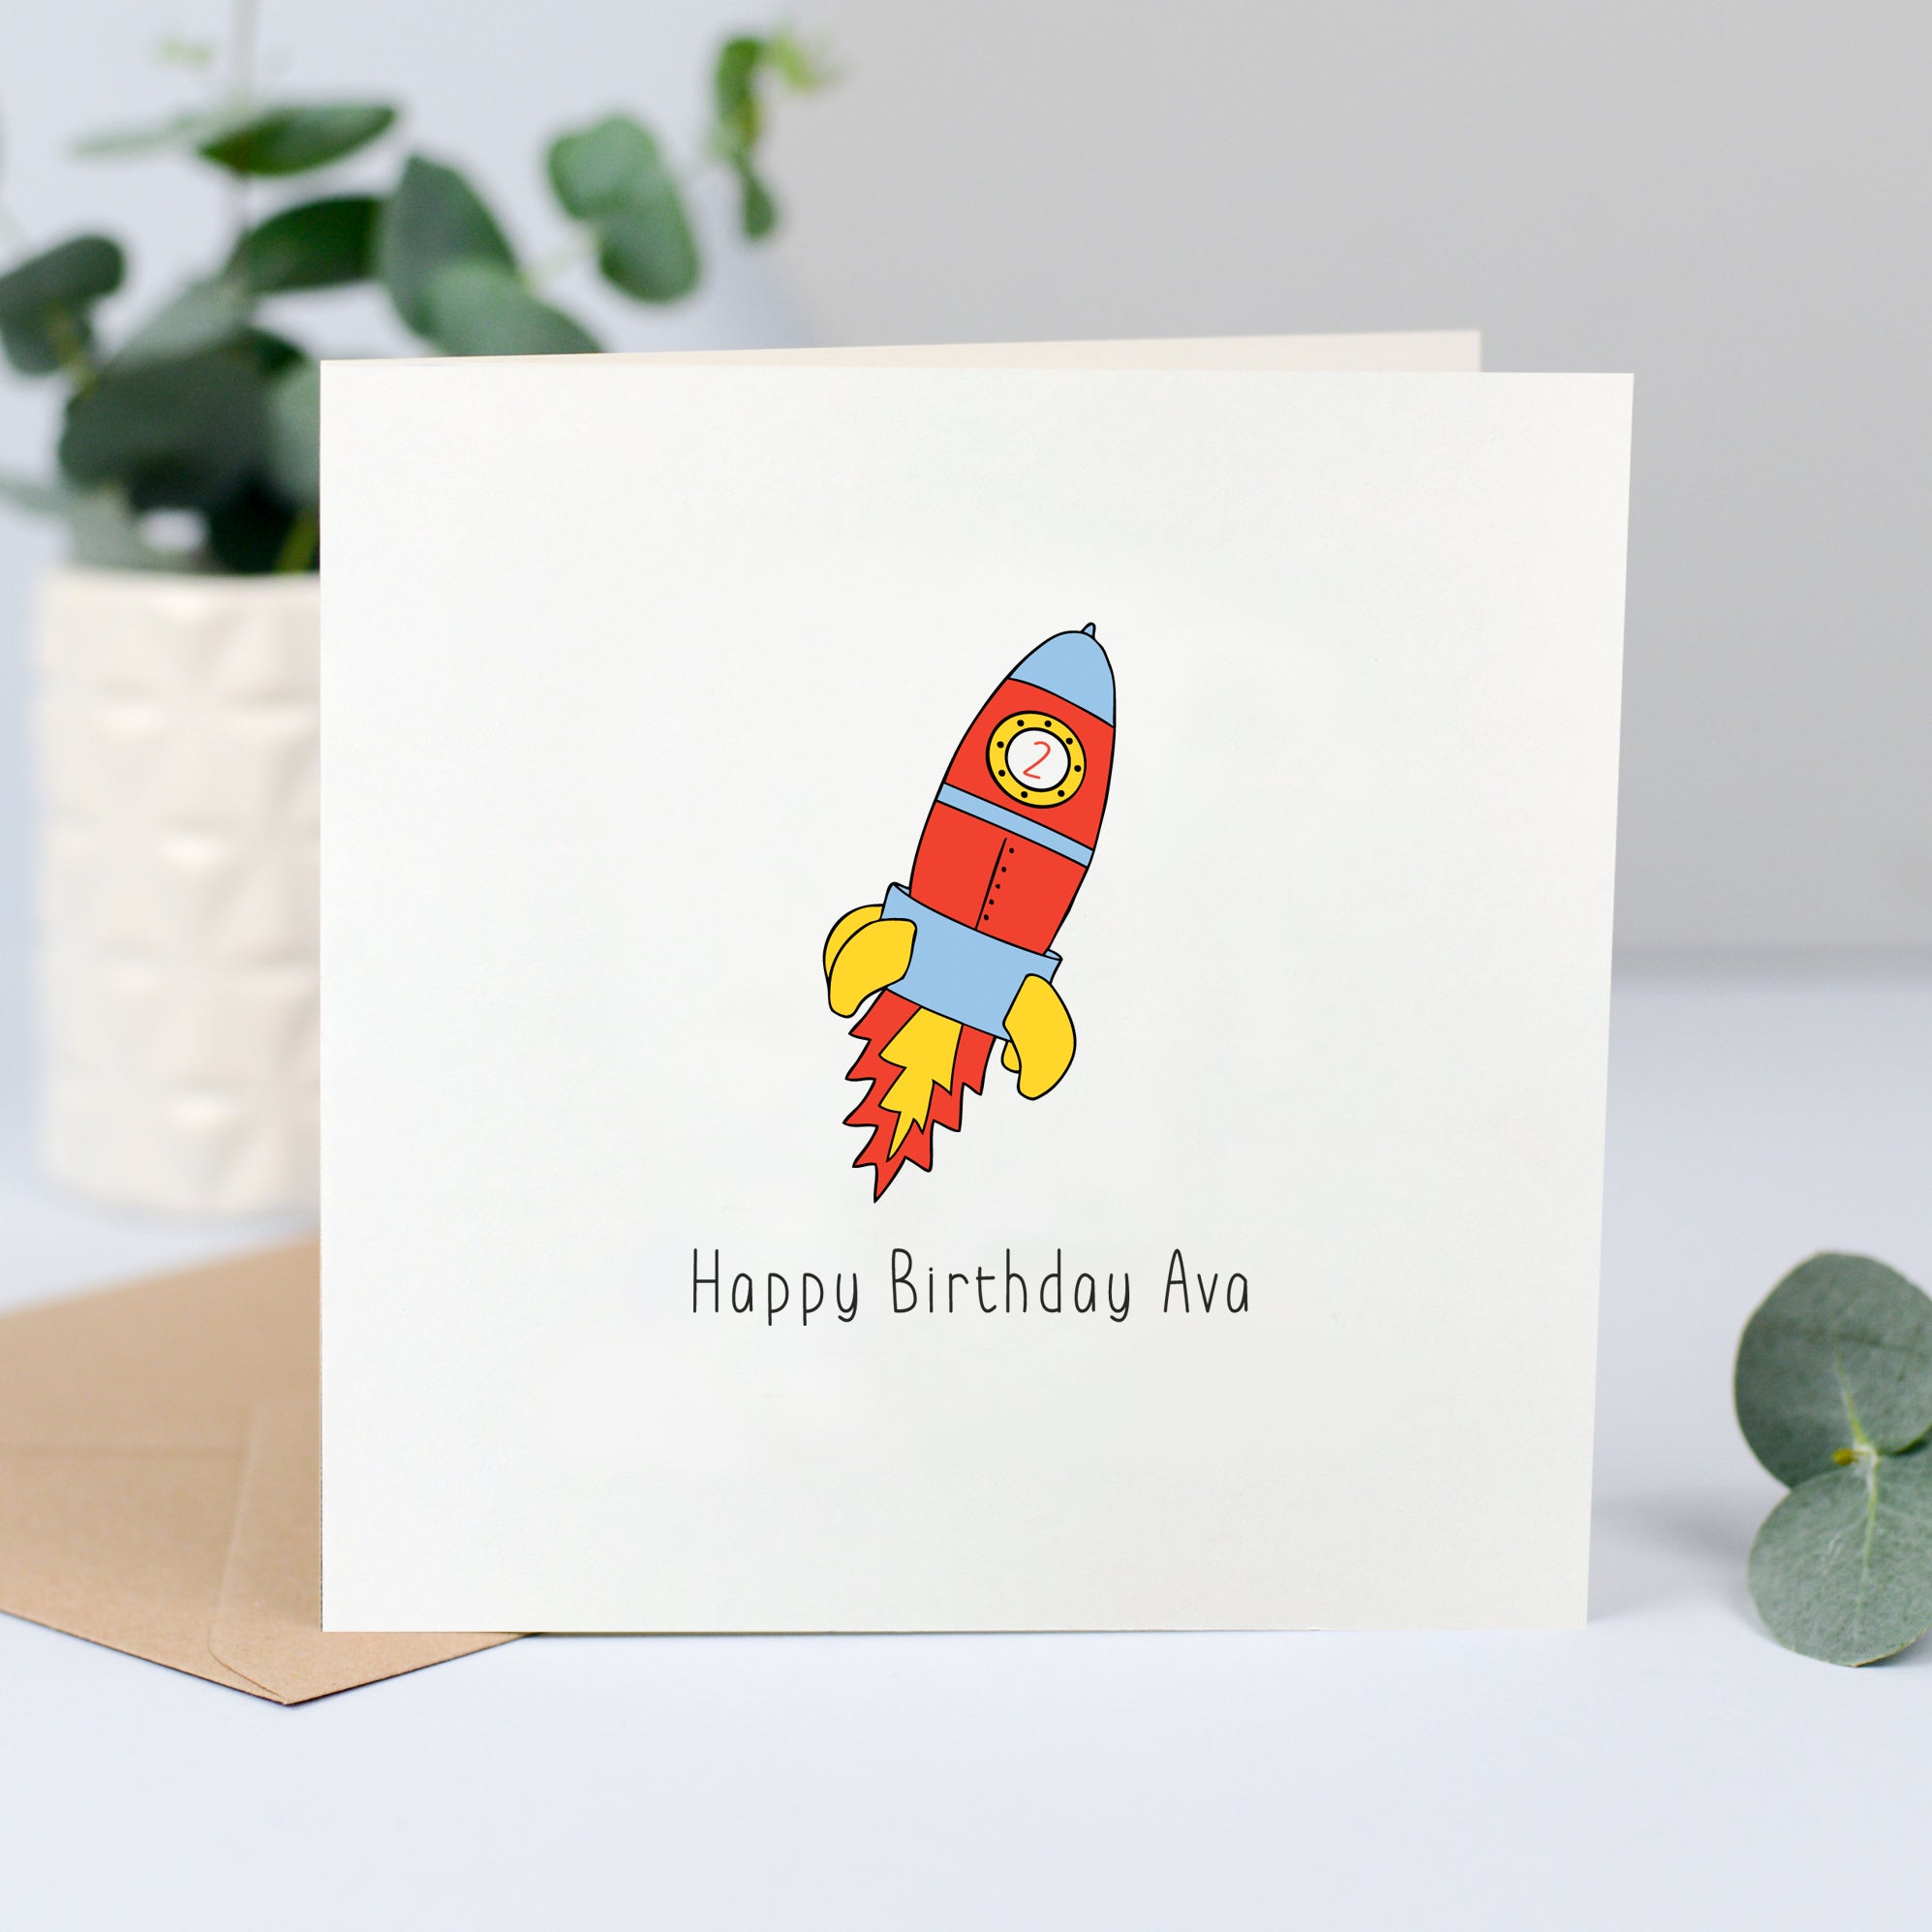 Rocket birthday card